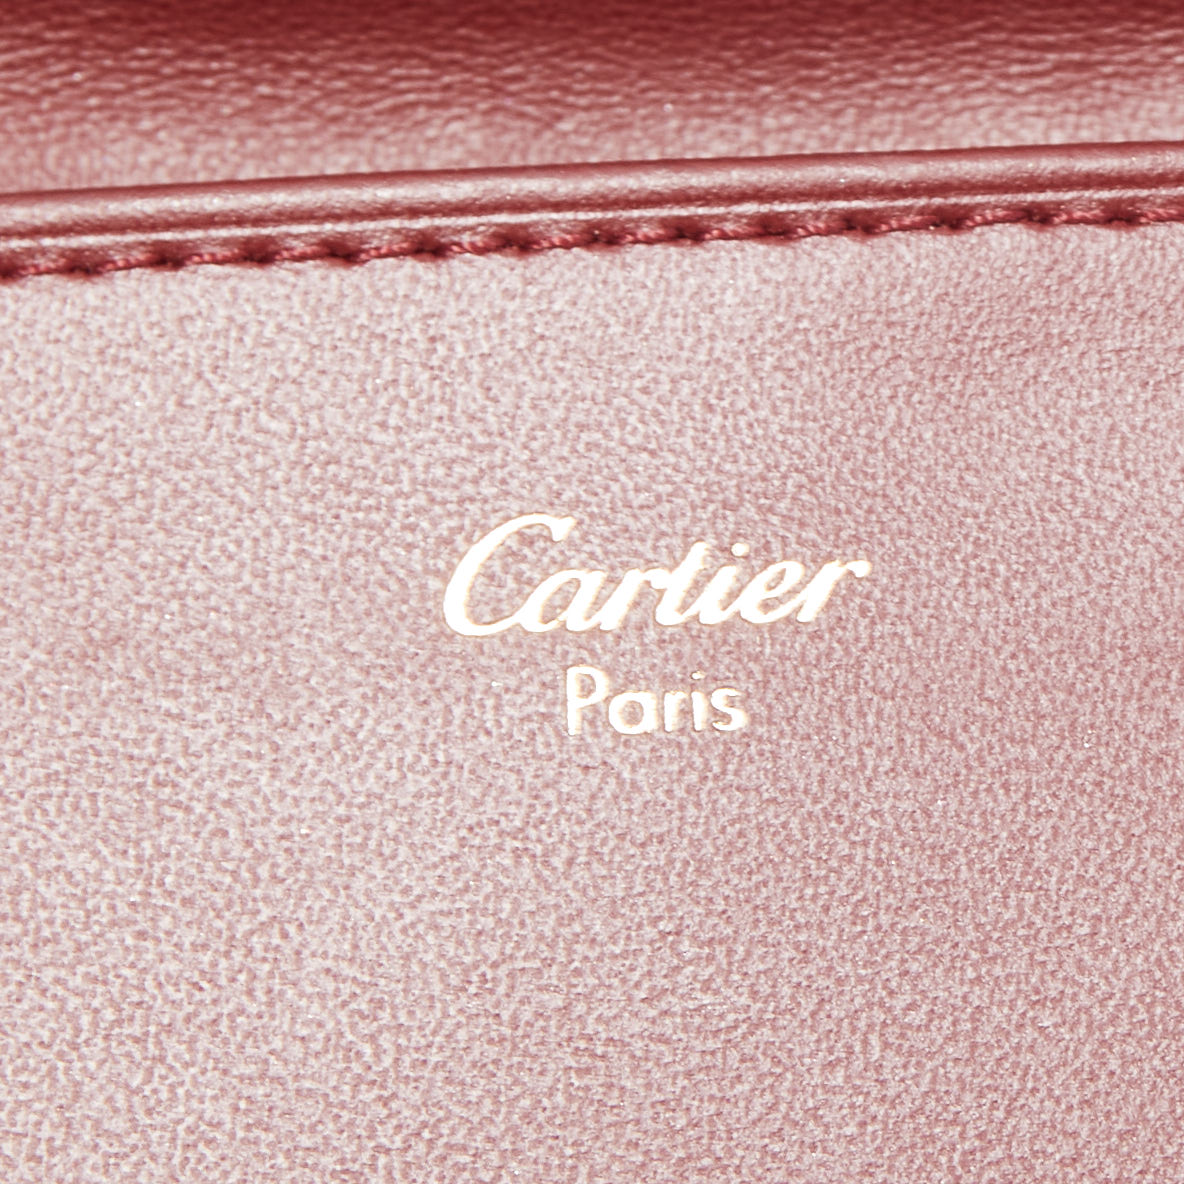 Cartier Burgundy Leather Must De Cartier Envelope Wallet